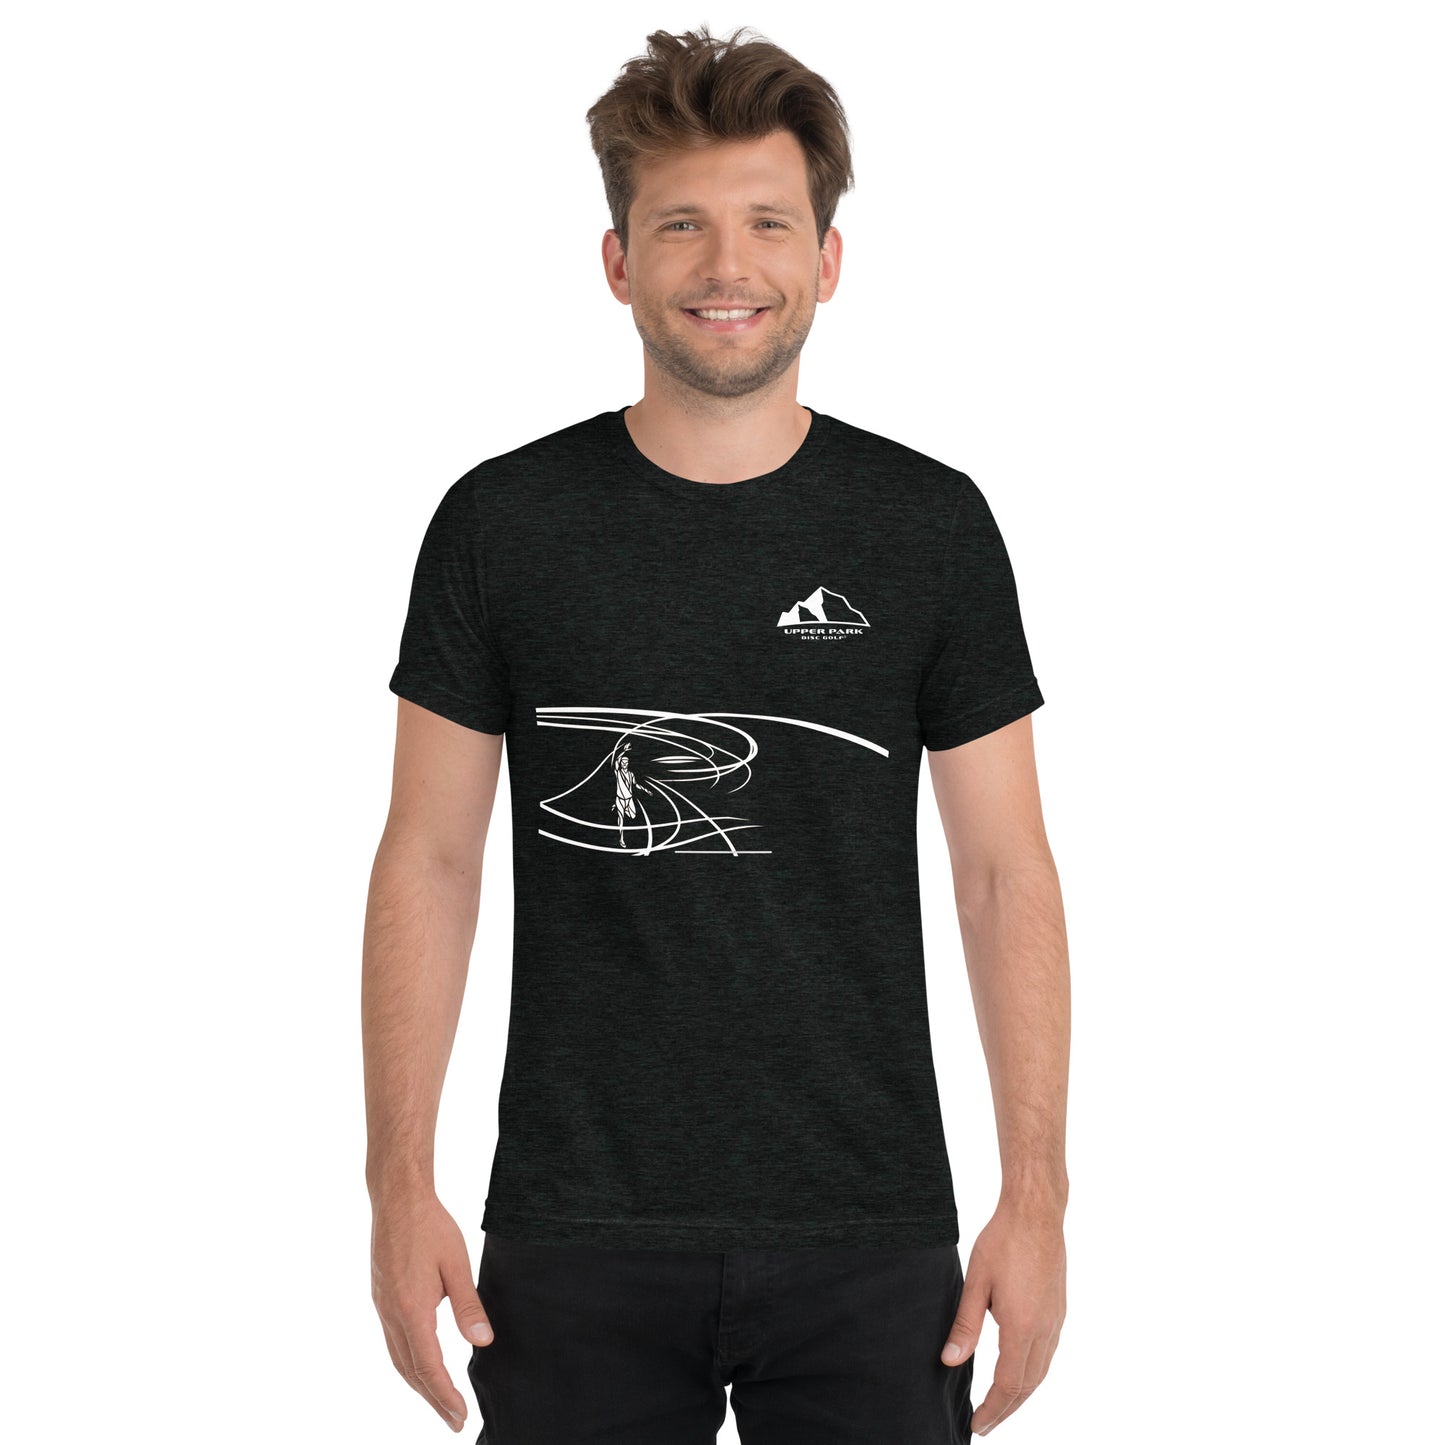 Flight path short sleeve tri-blend t-shirt w logo